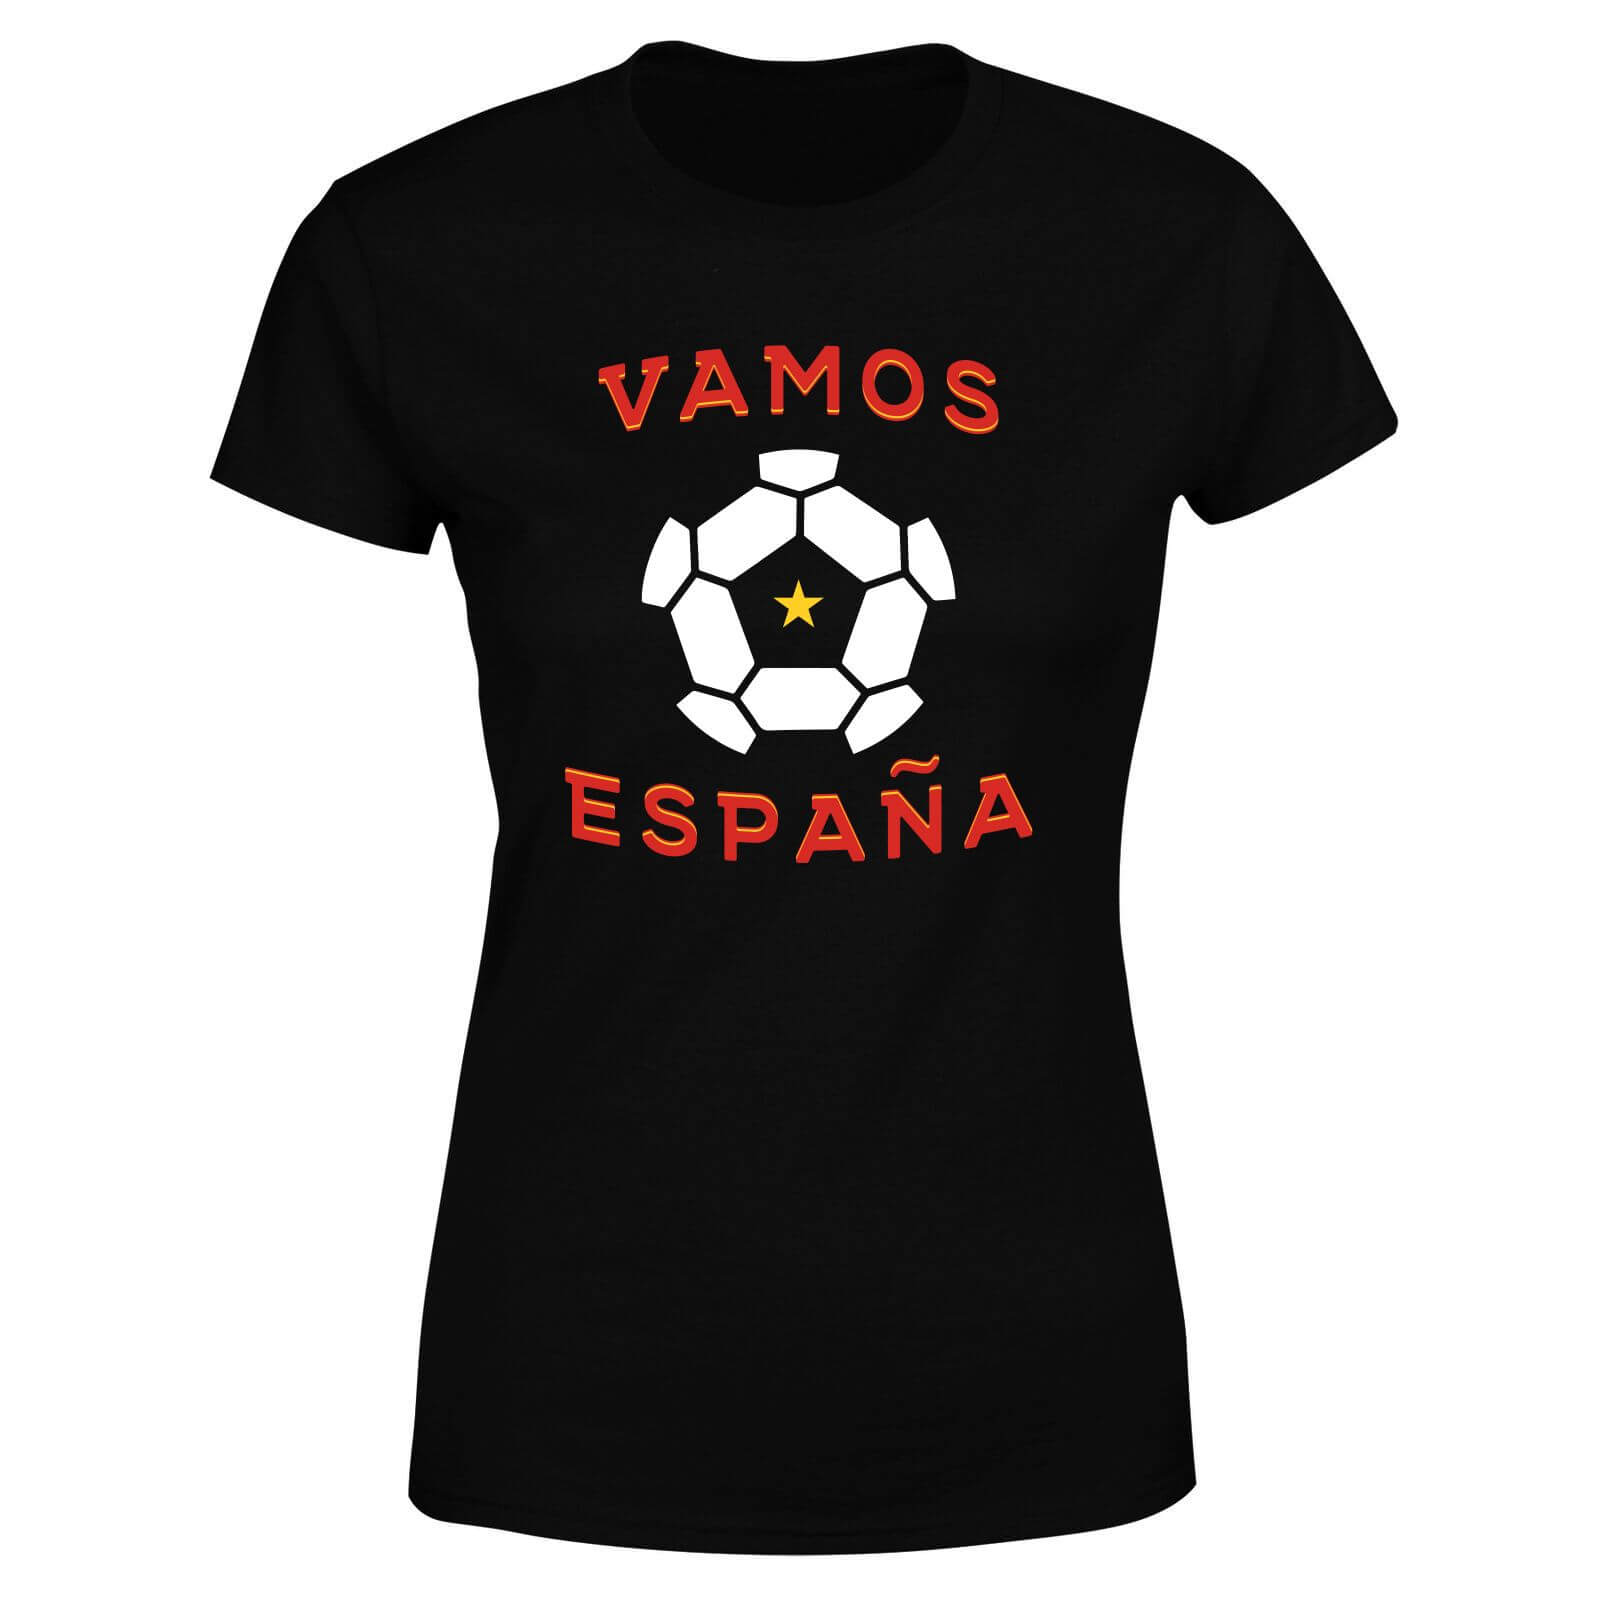 Vamos Espana Women's T-Shirt - Black - 3XL - Black